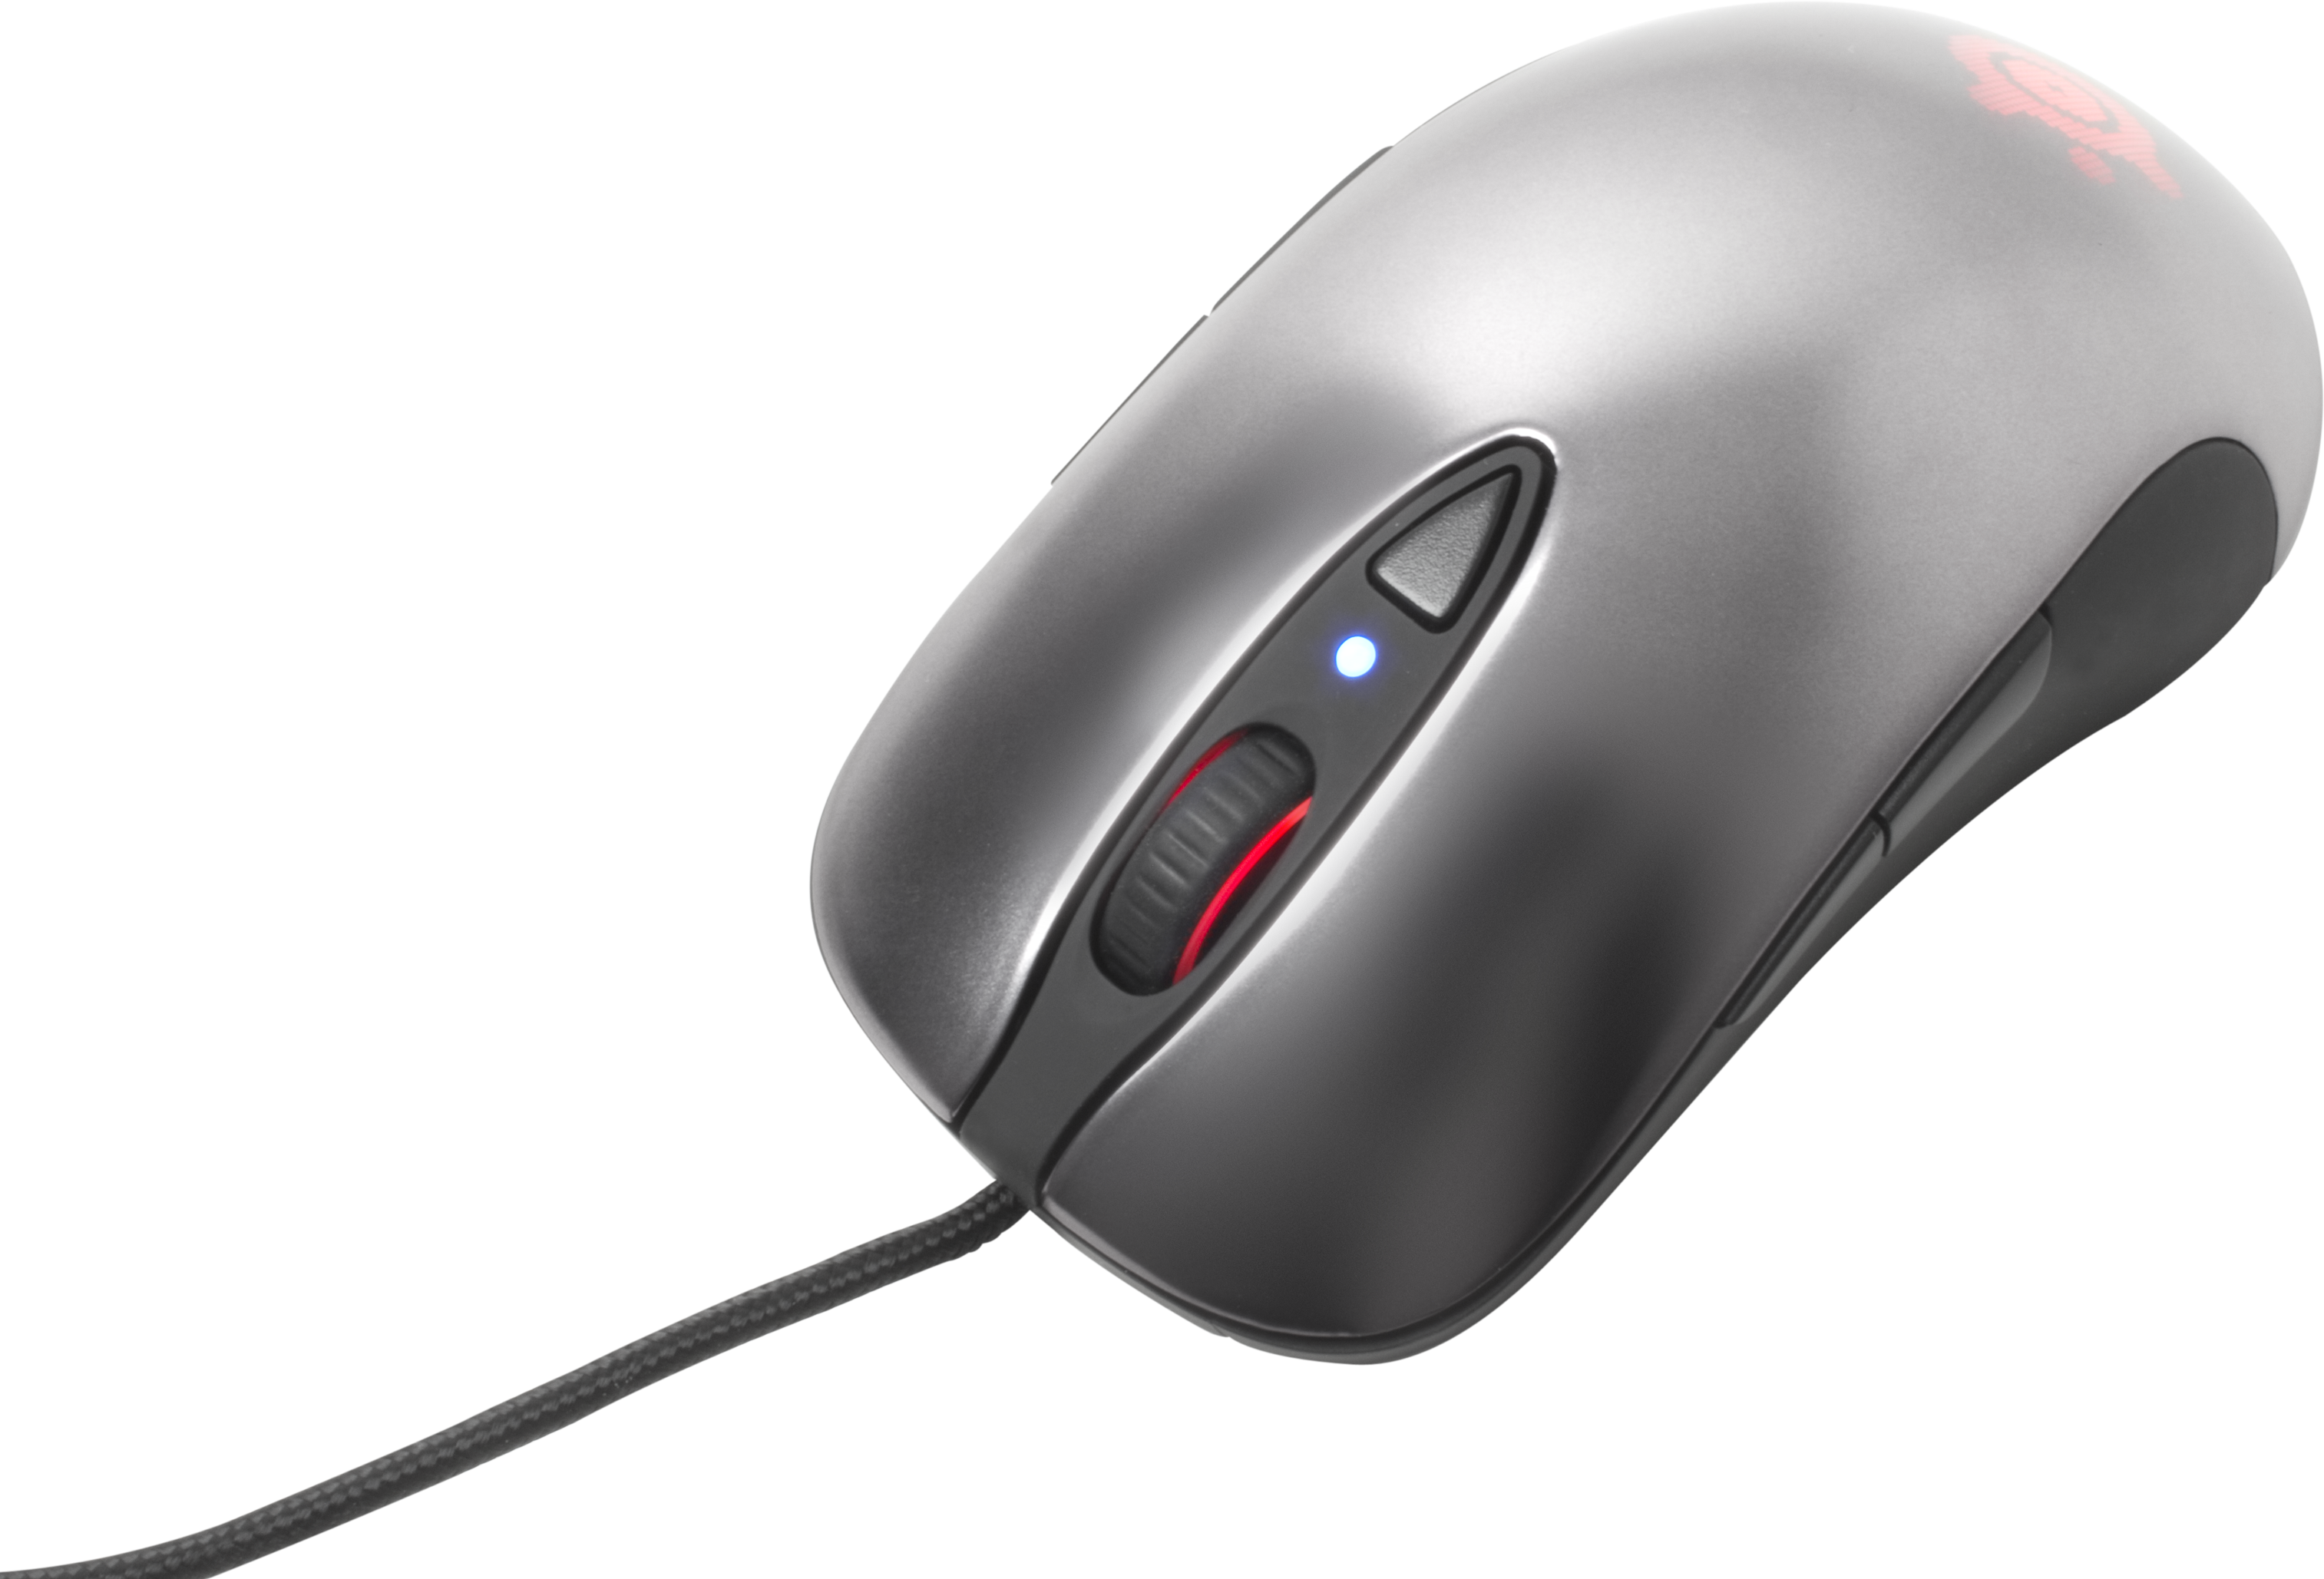 Sibm mouse. Steelseries Sensei 62150 клавиша. Мышка. Мышка компьютерная. Мышь компьютера.